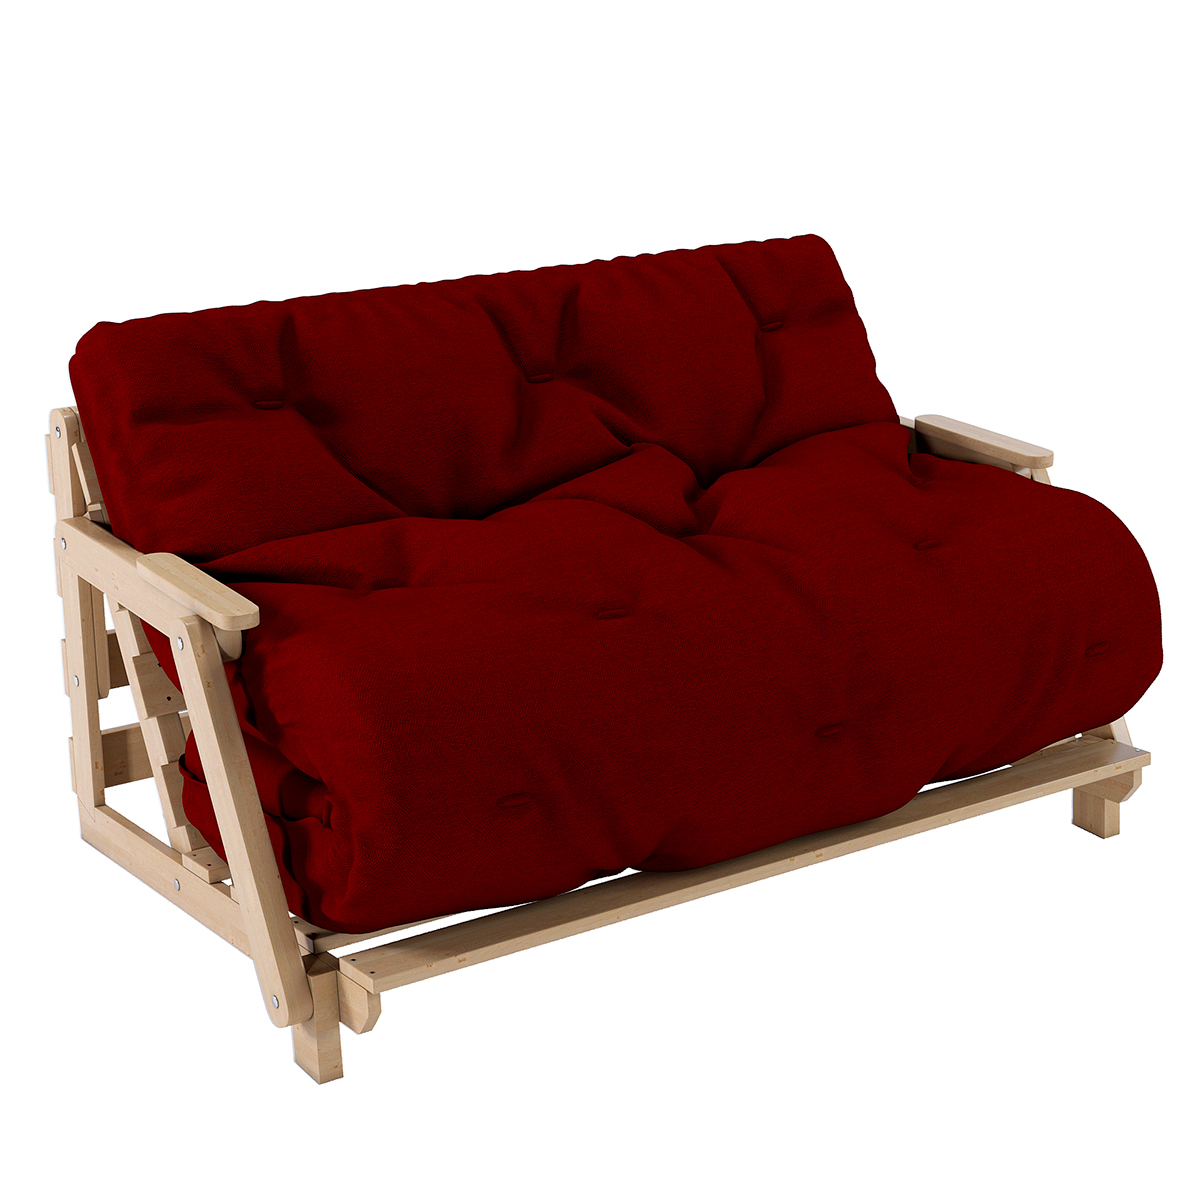 Futon futon art садовая мебель Матрас лежак футон 3DDD 3dsky Turbosquid cgtrader